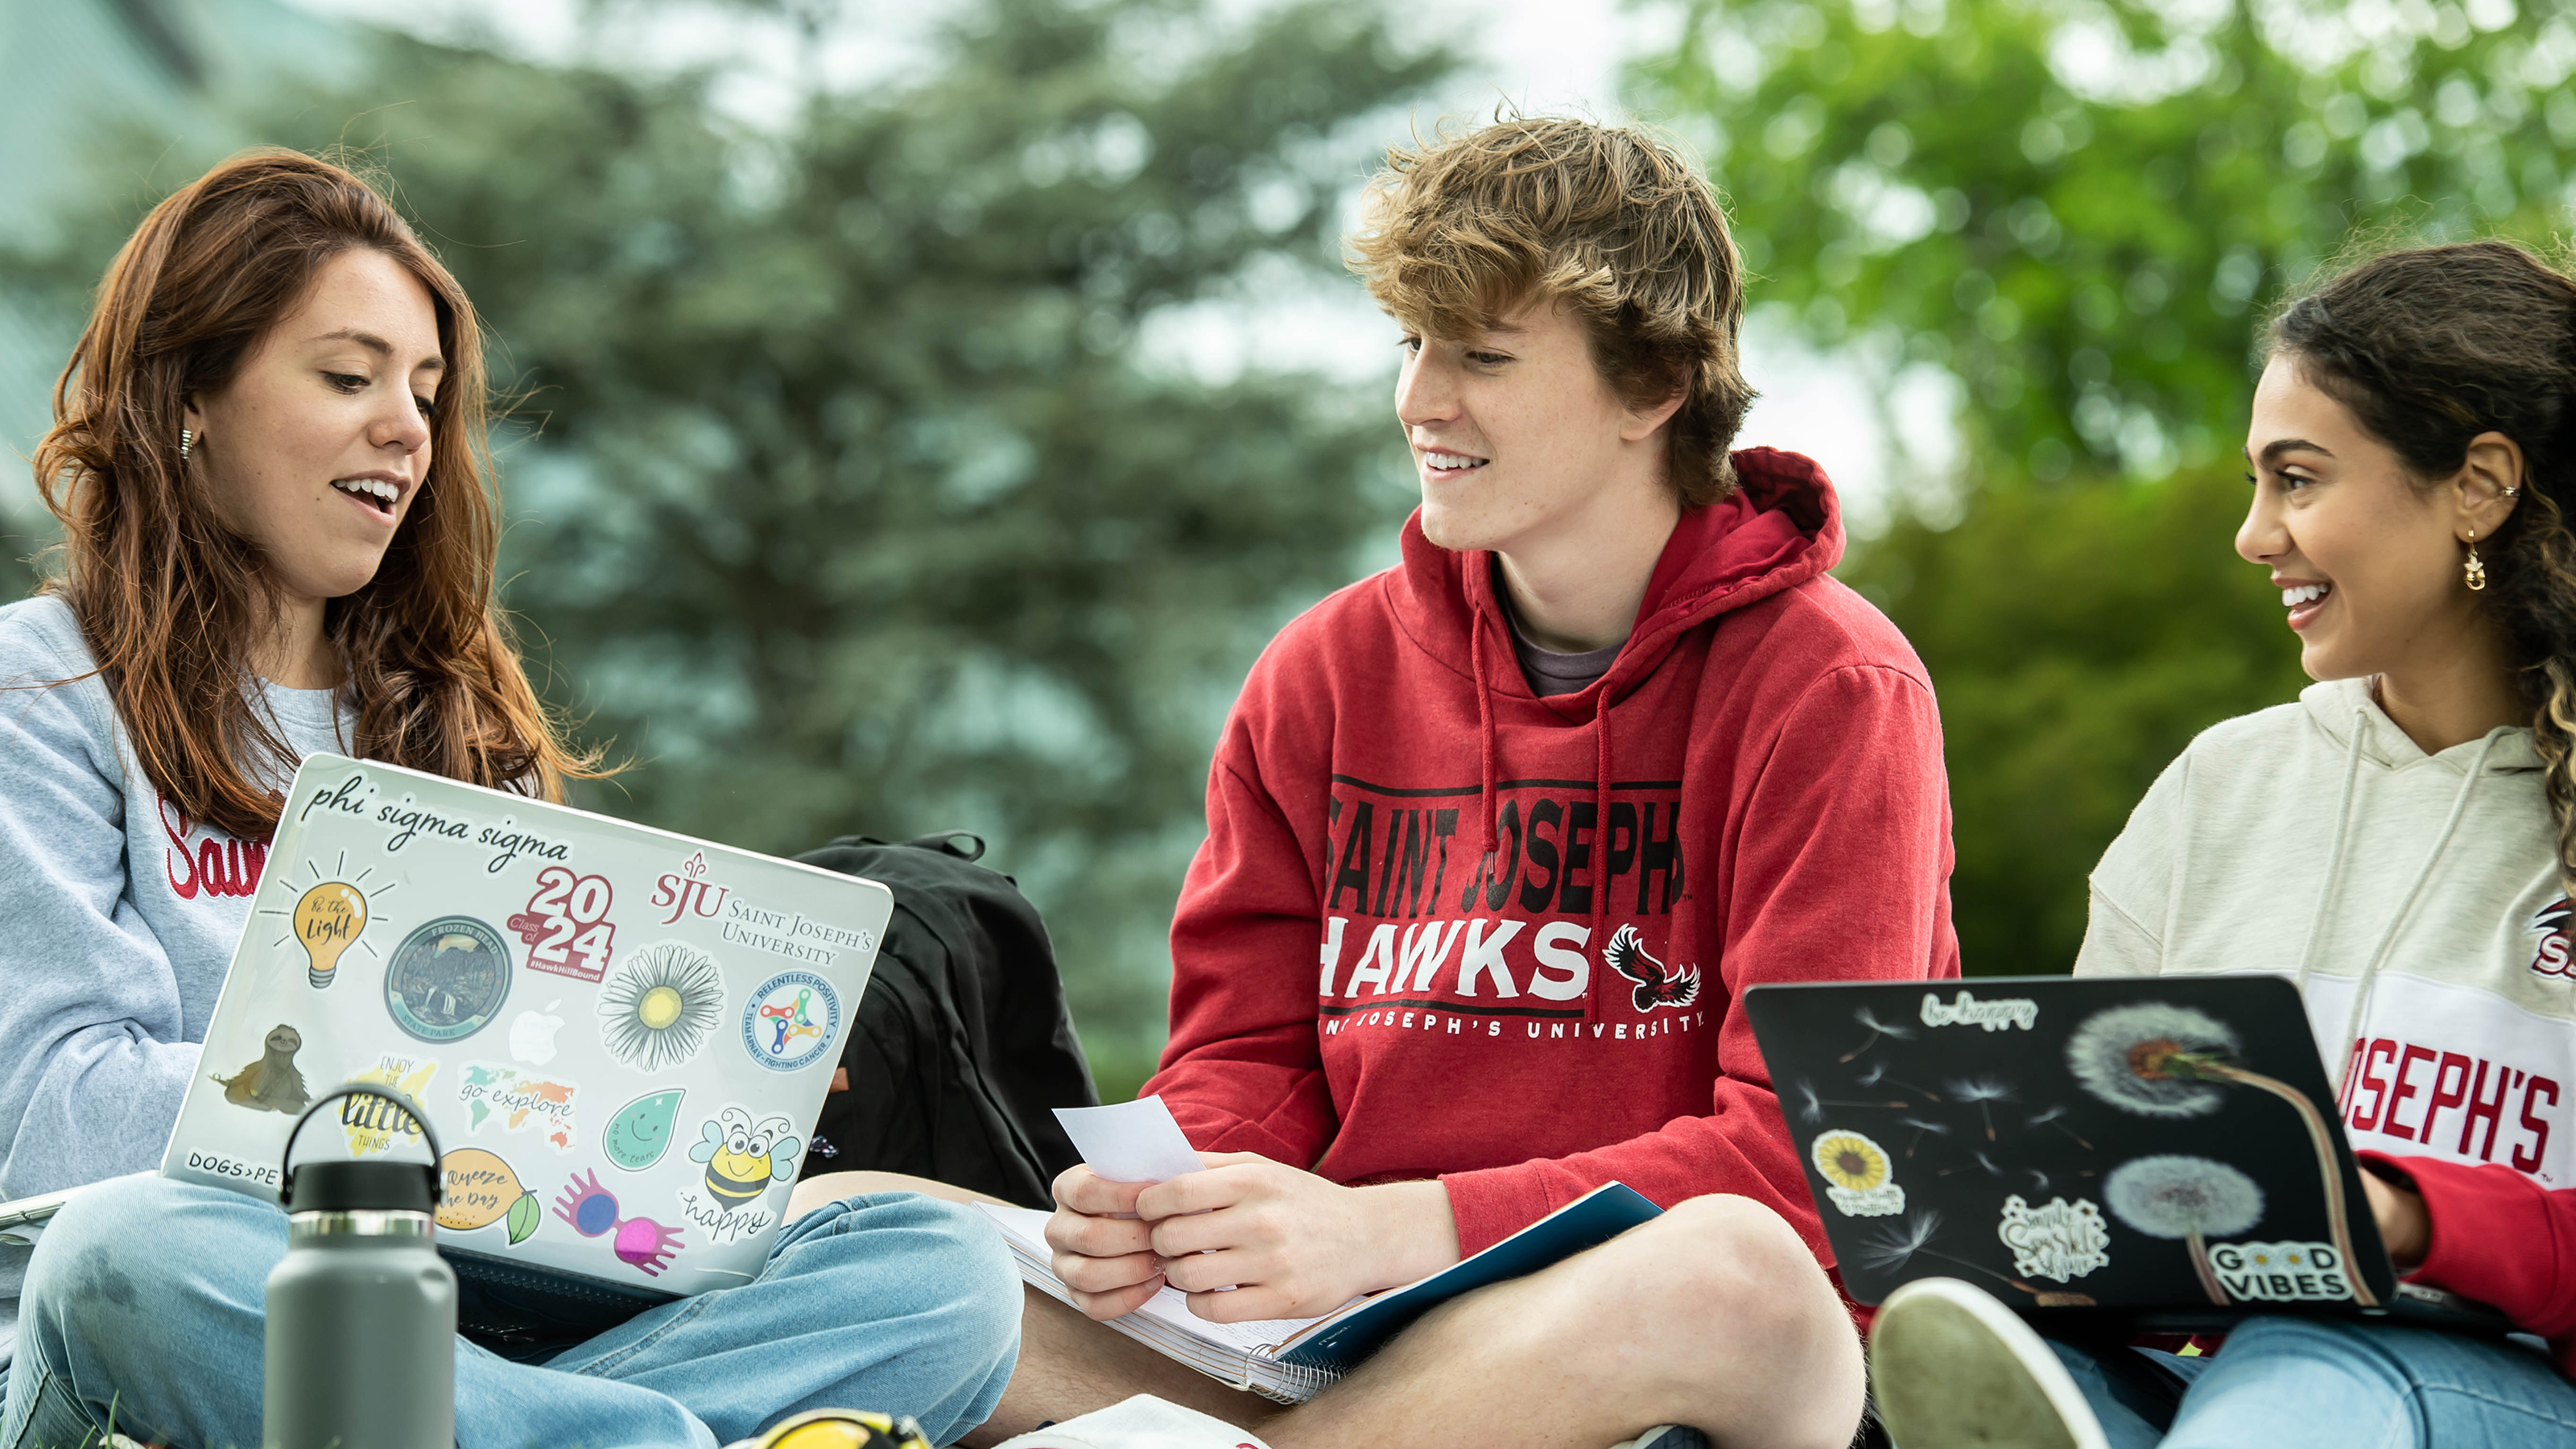 Students studying on laptops at Saint Joseph's University